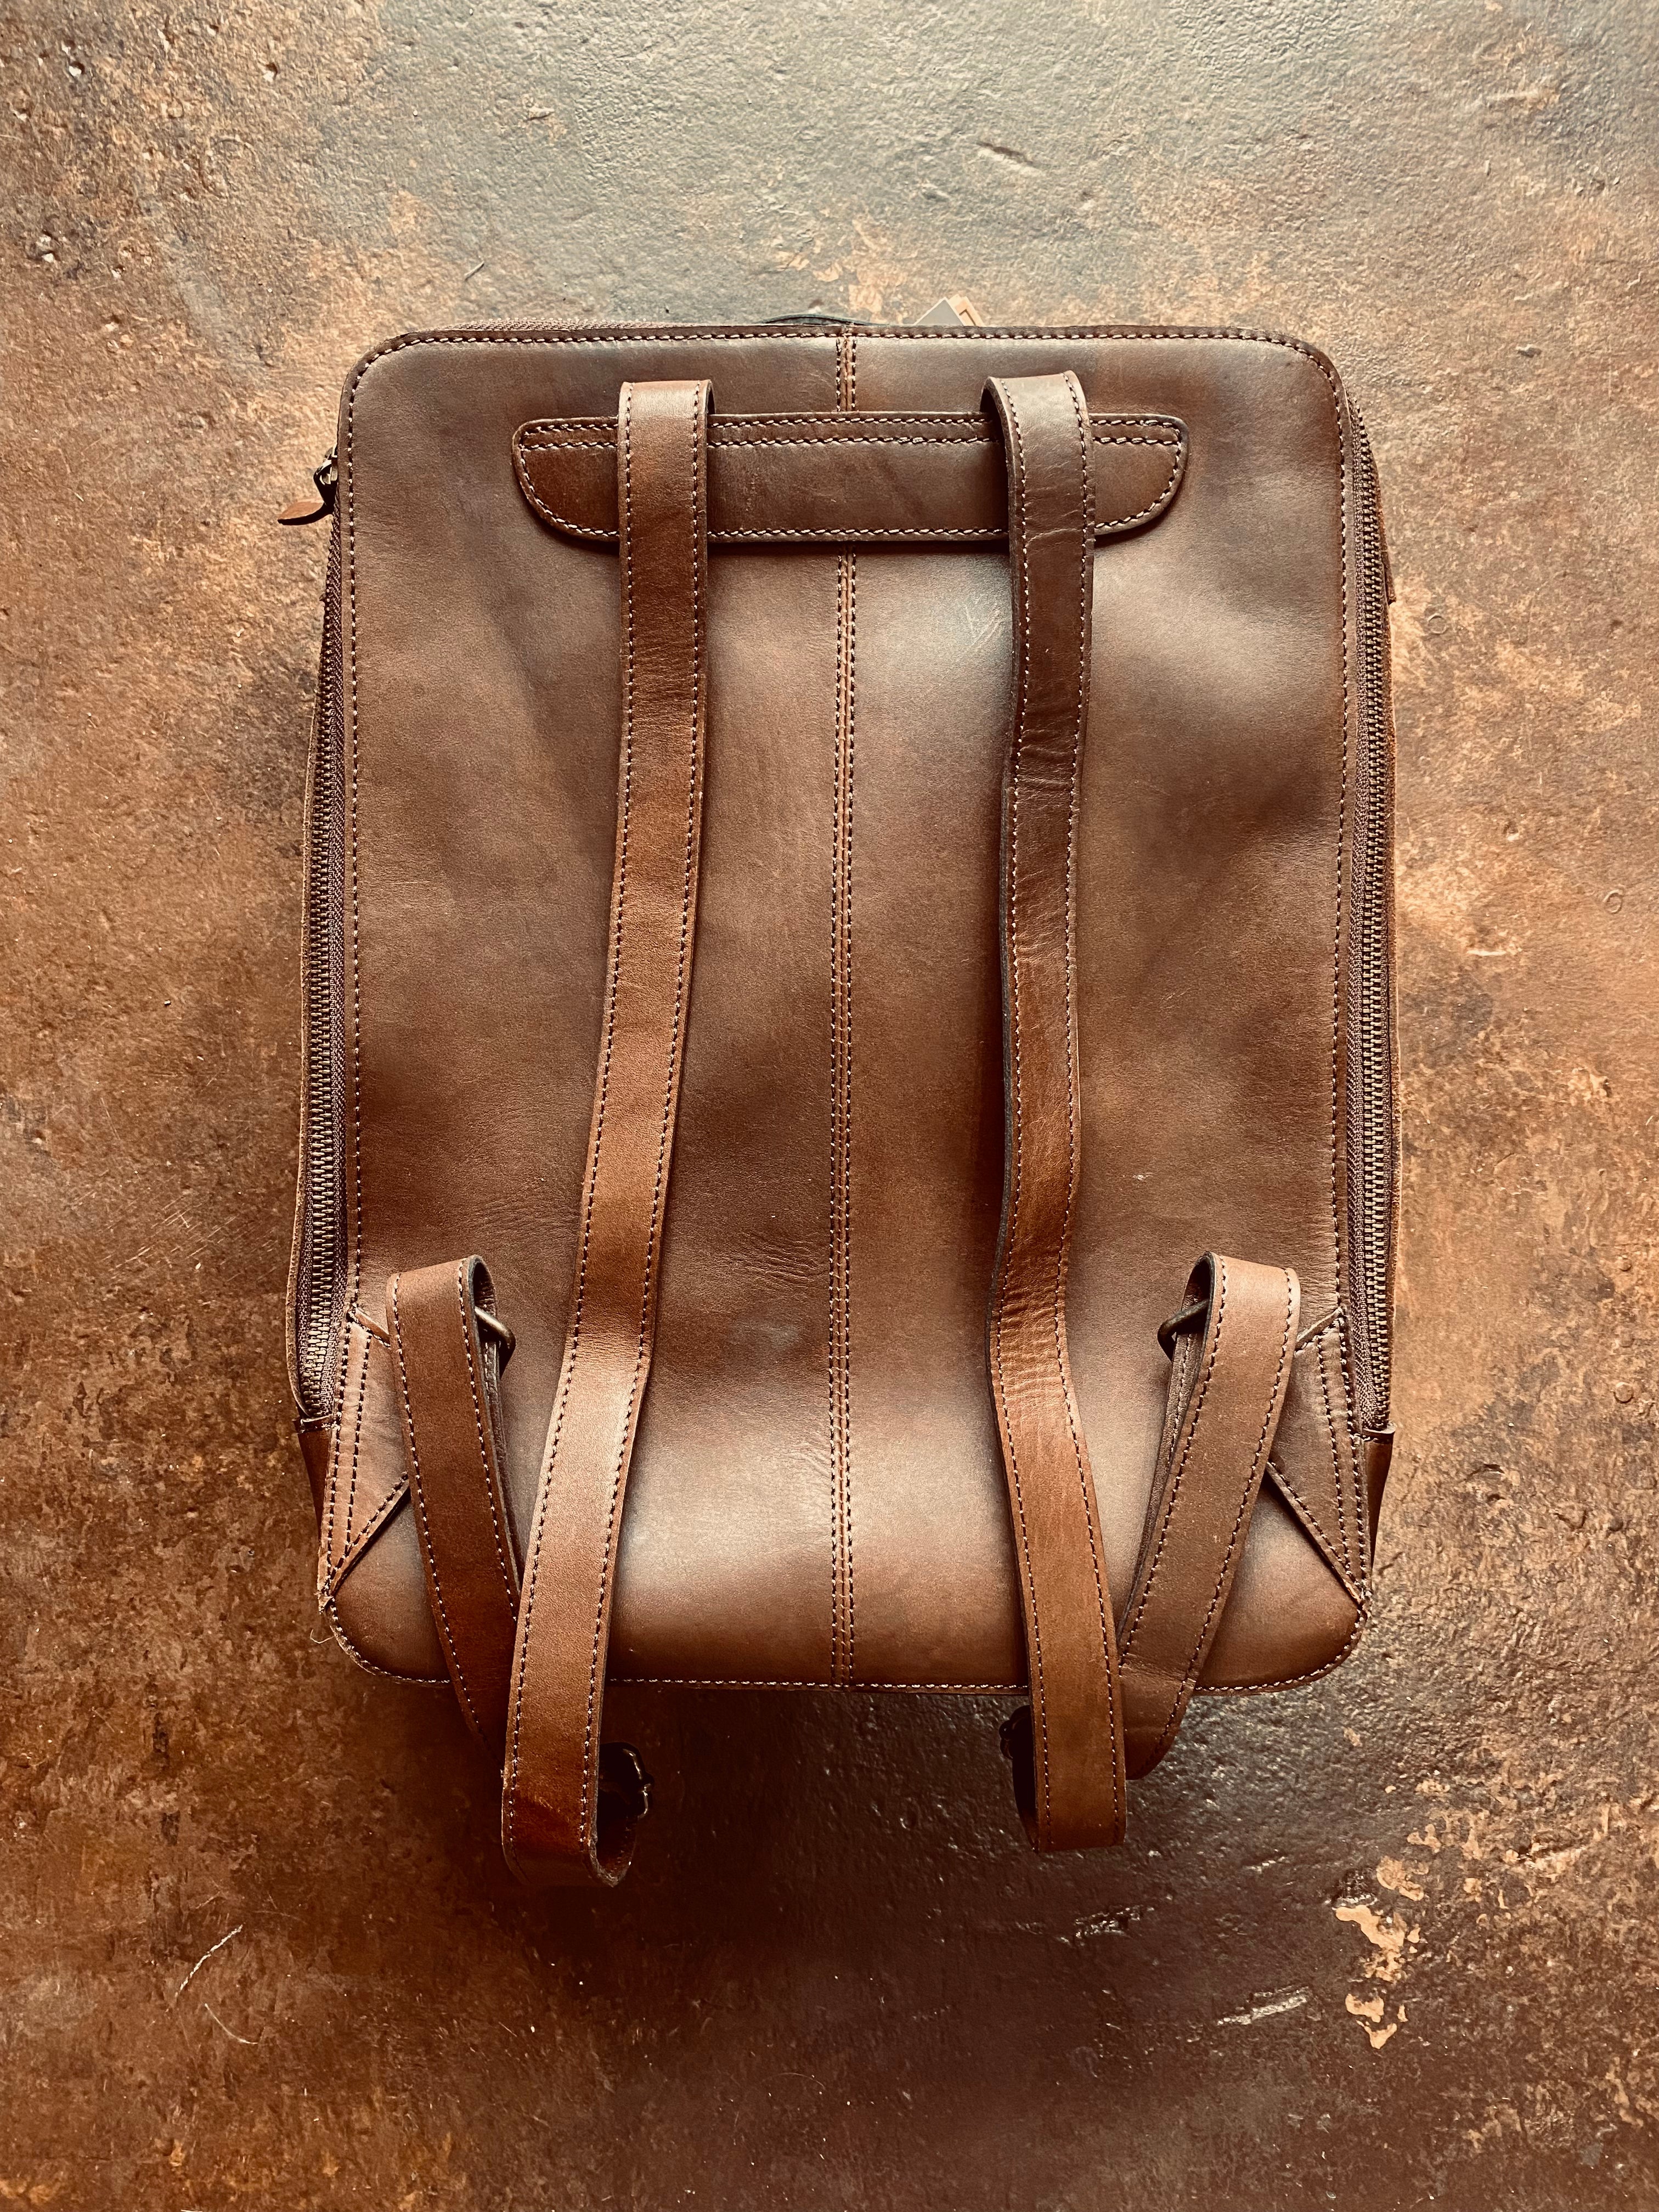 The Westward Backpack